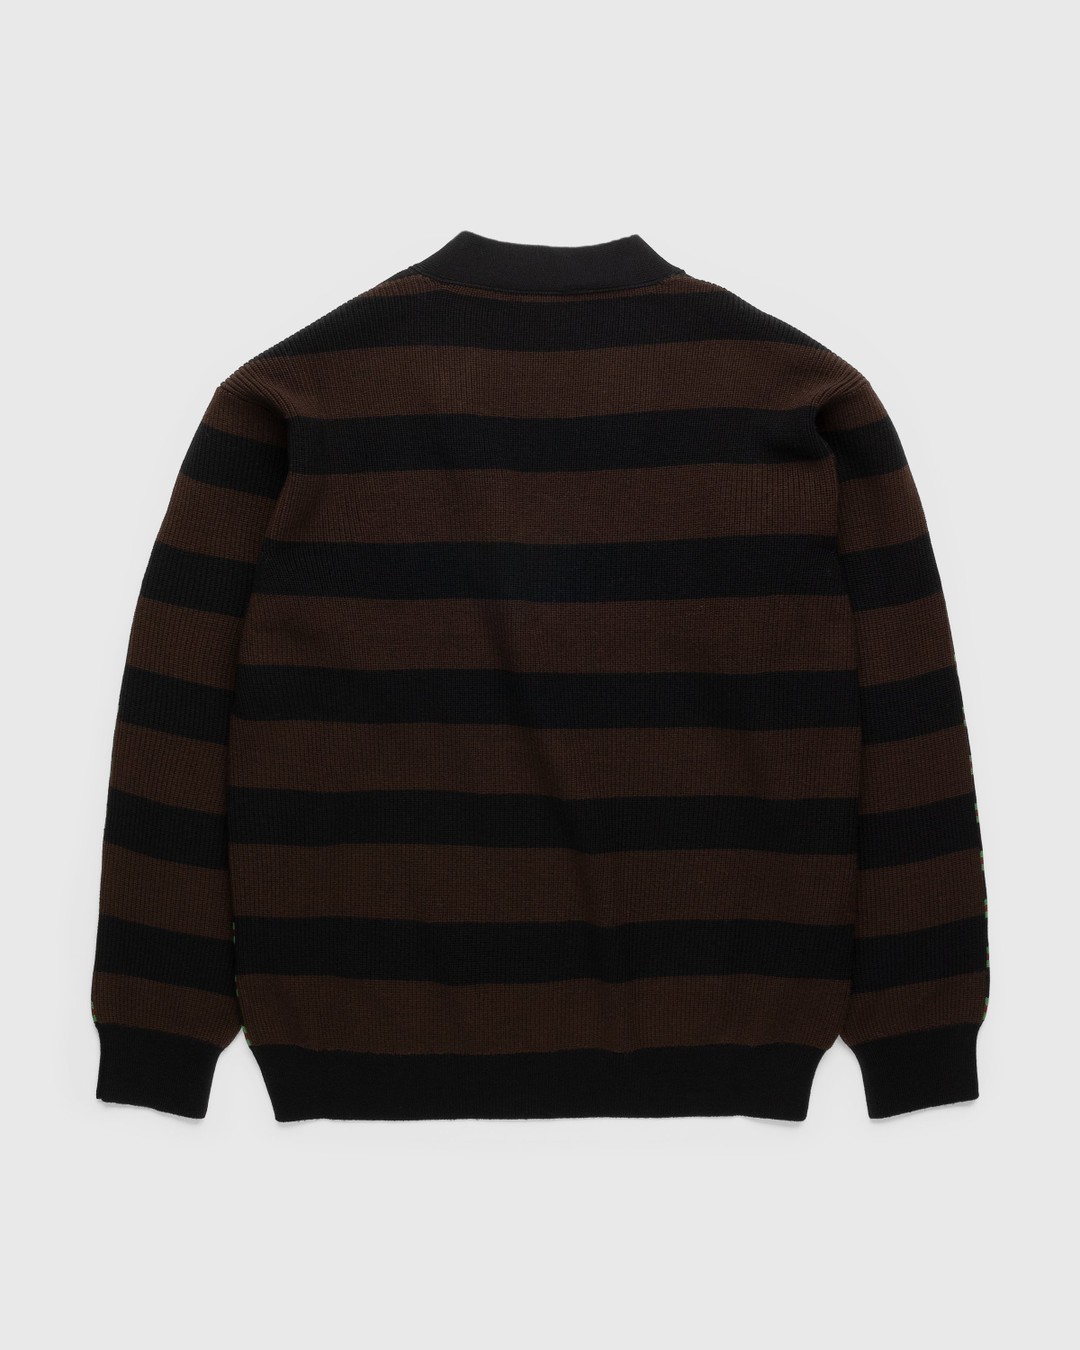 Kenzo – Striped Wool Cardigan Black - Cardigans - Black - Image 2